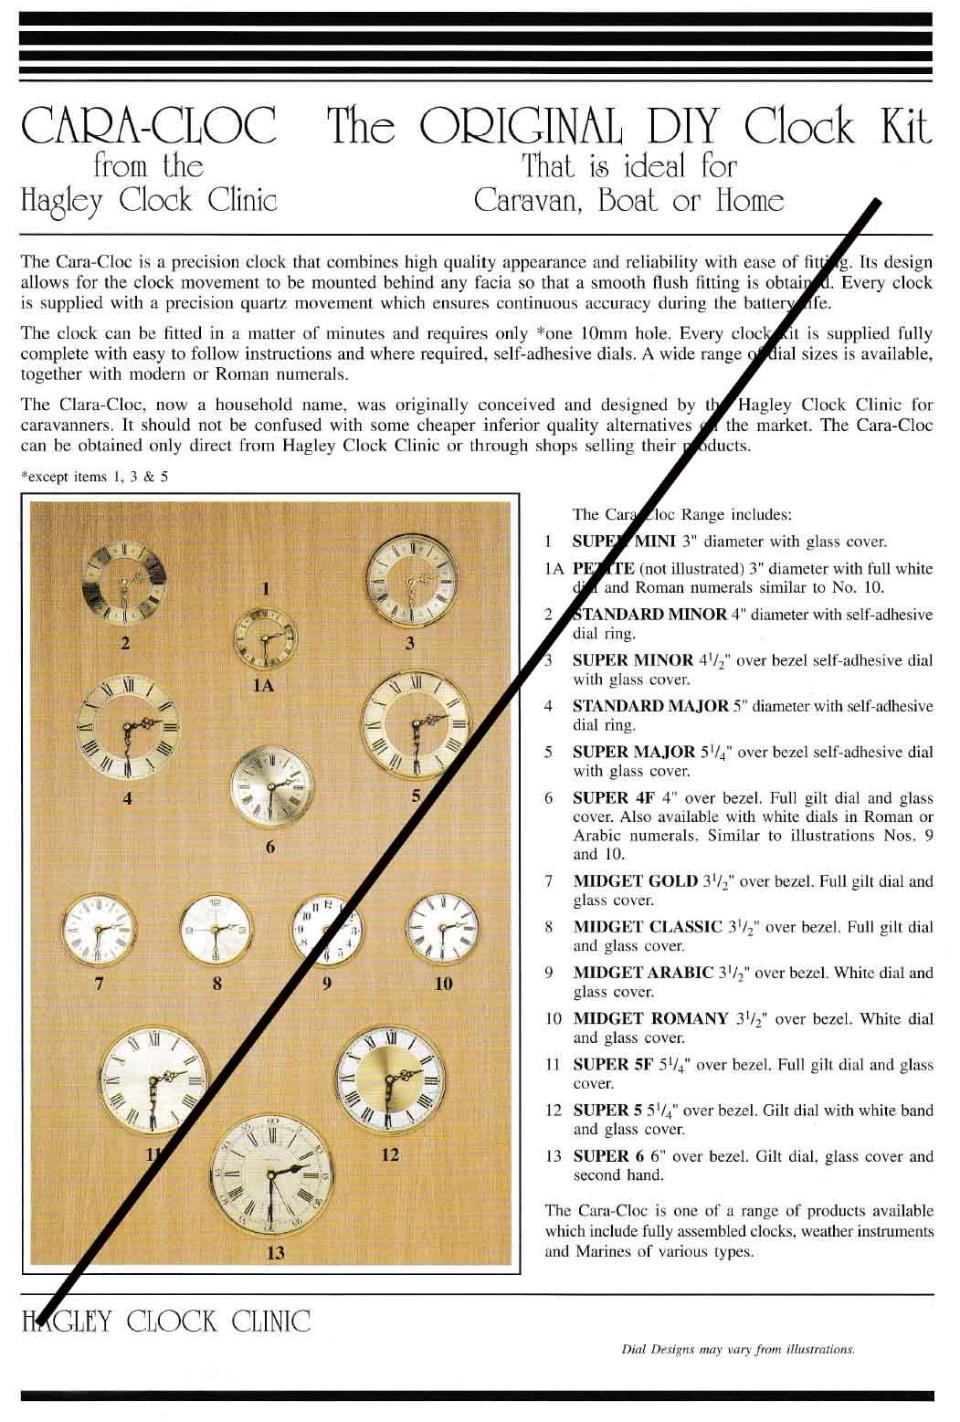 Hagley Clock Clinic. Vintage Cara-Cloc information